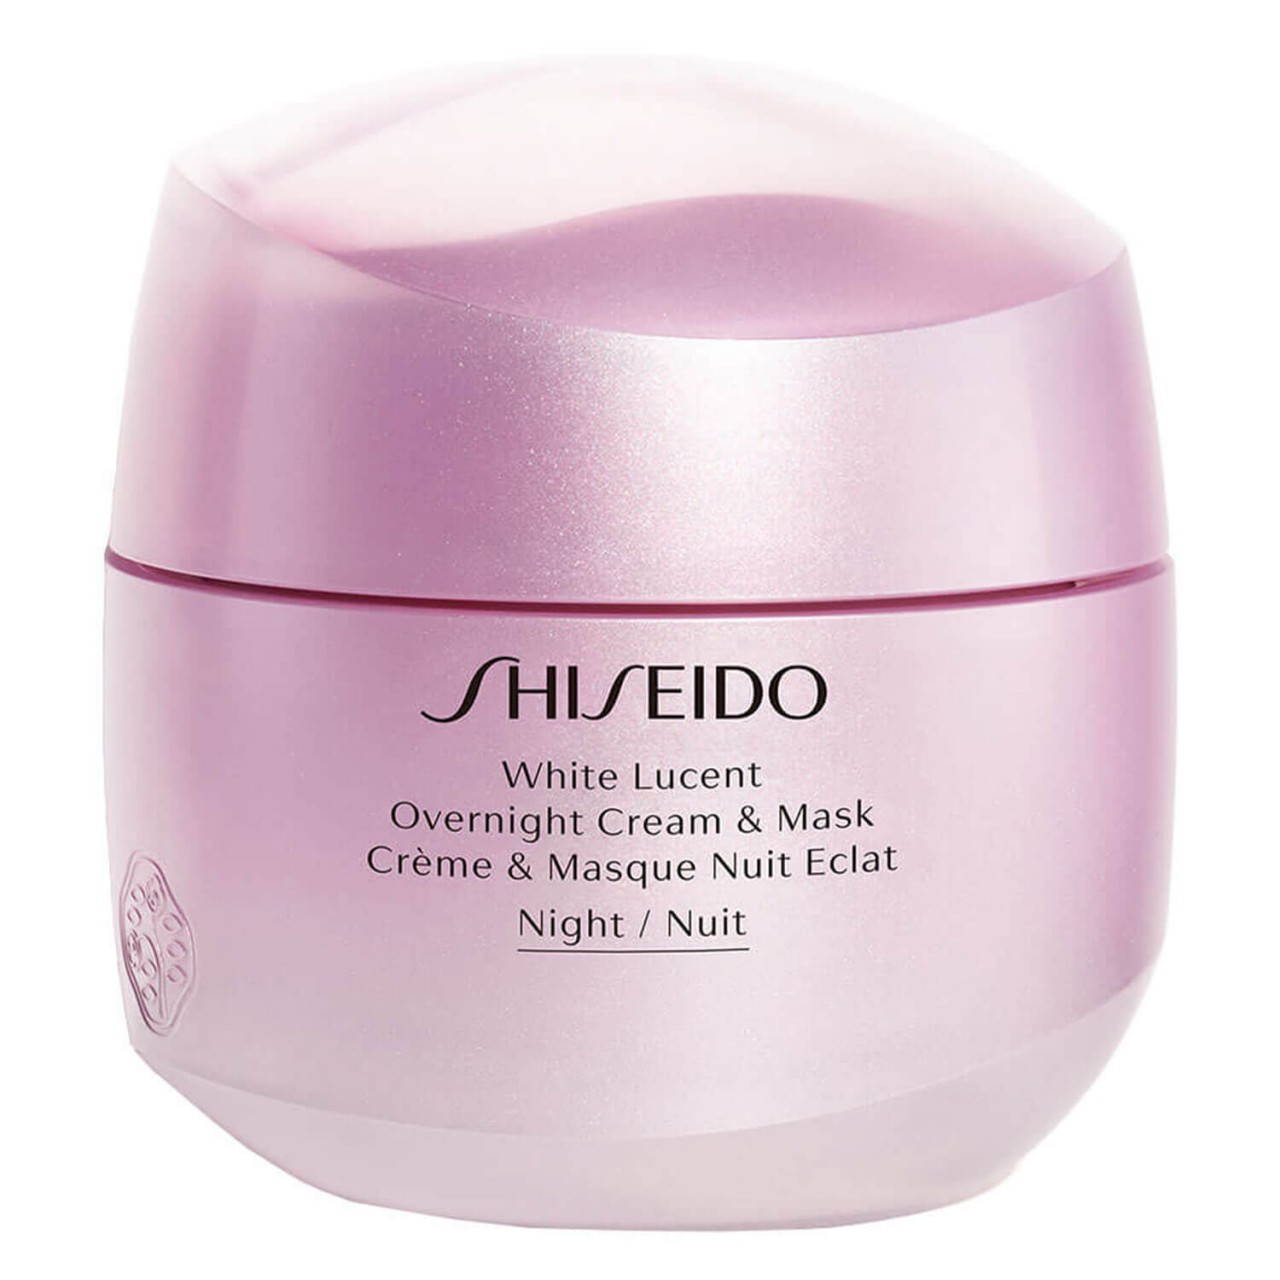 White Lucent - Overnight Cream & Mask von Shiseido